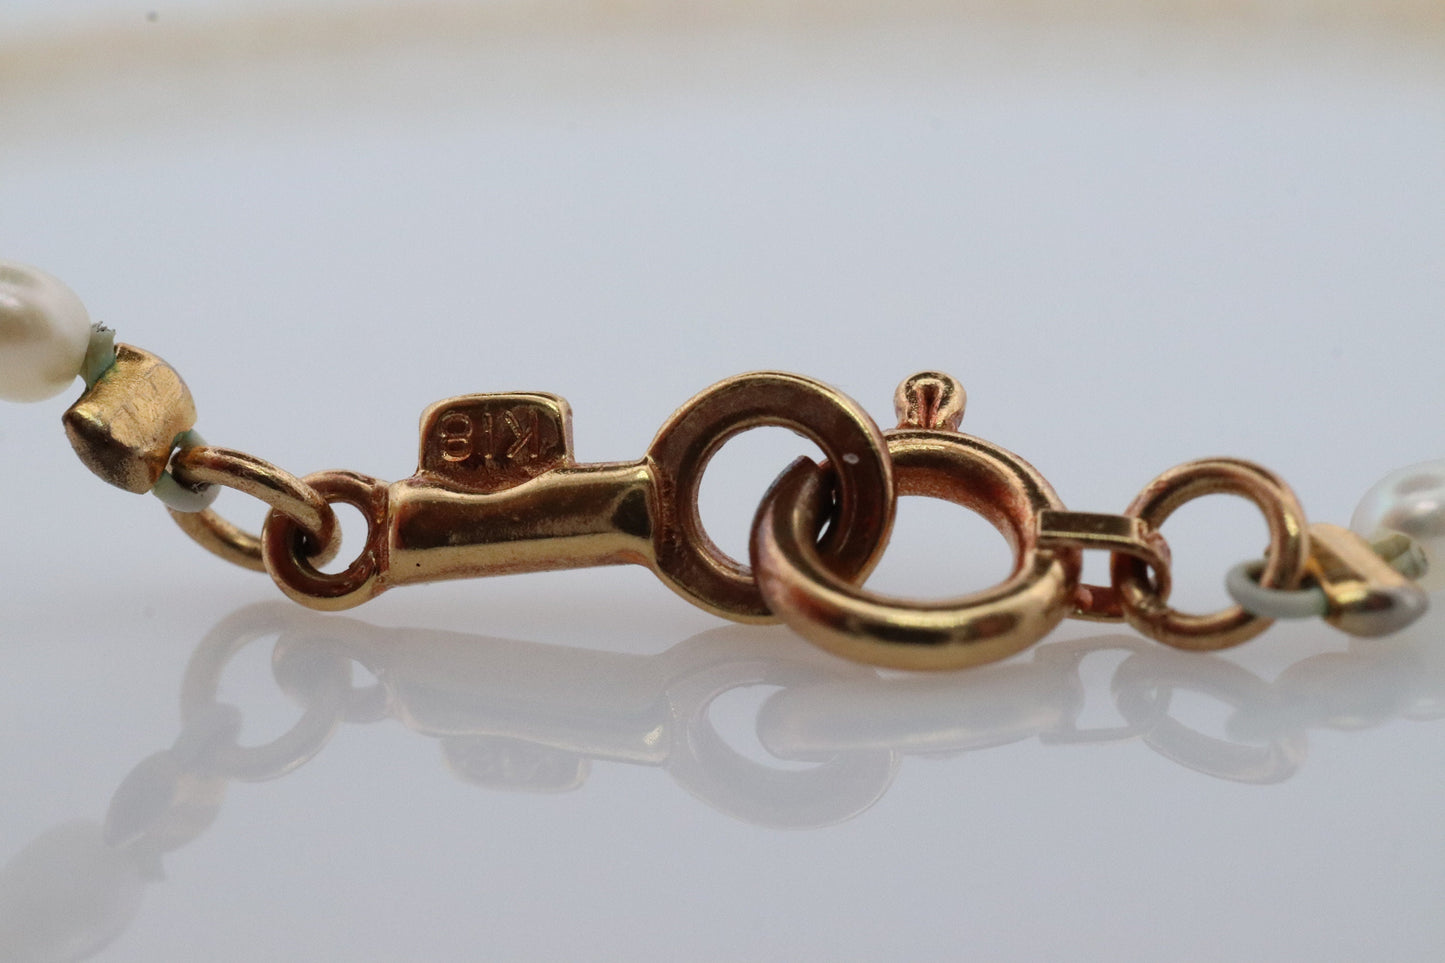 Mikimoto Necklace. Vintage 18k Gold Mikimoto Perlita Pearls with Heart Pendant. Mikimoto Diamond Open heart pendant.